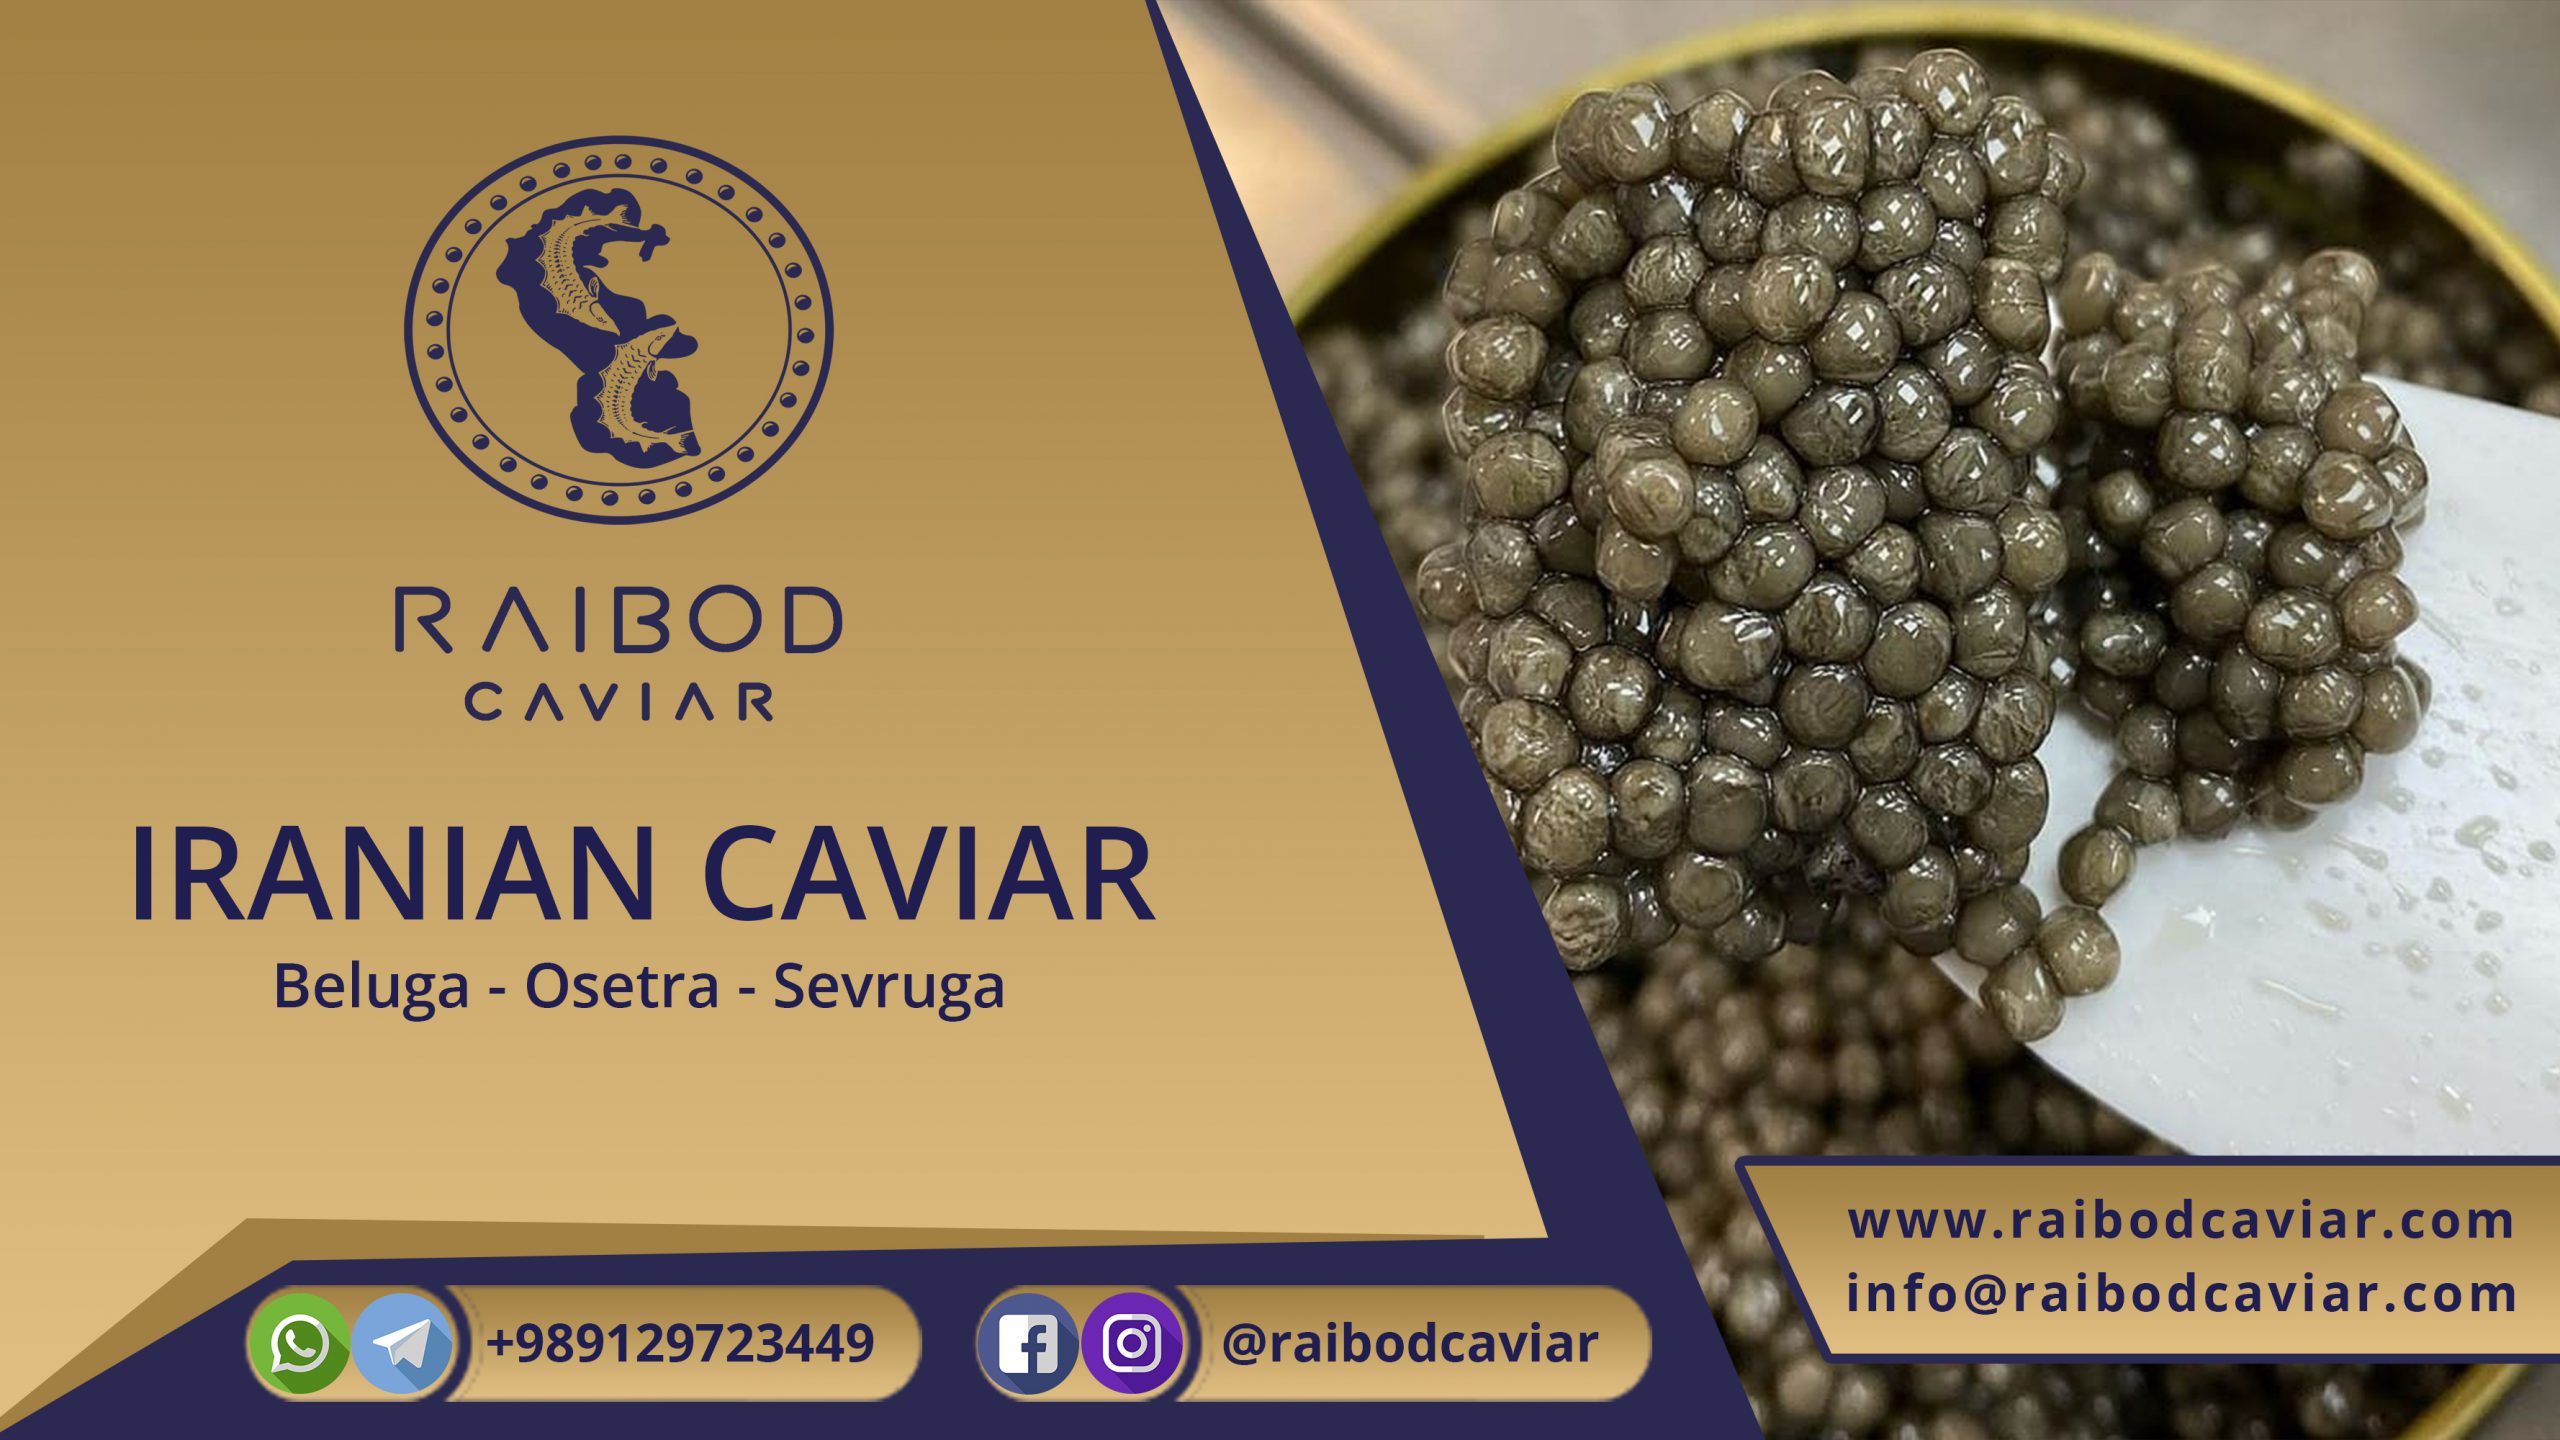 Major distribution of caviar